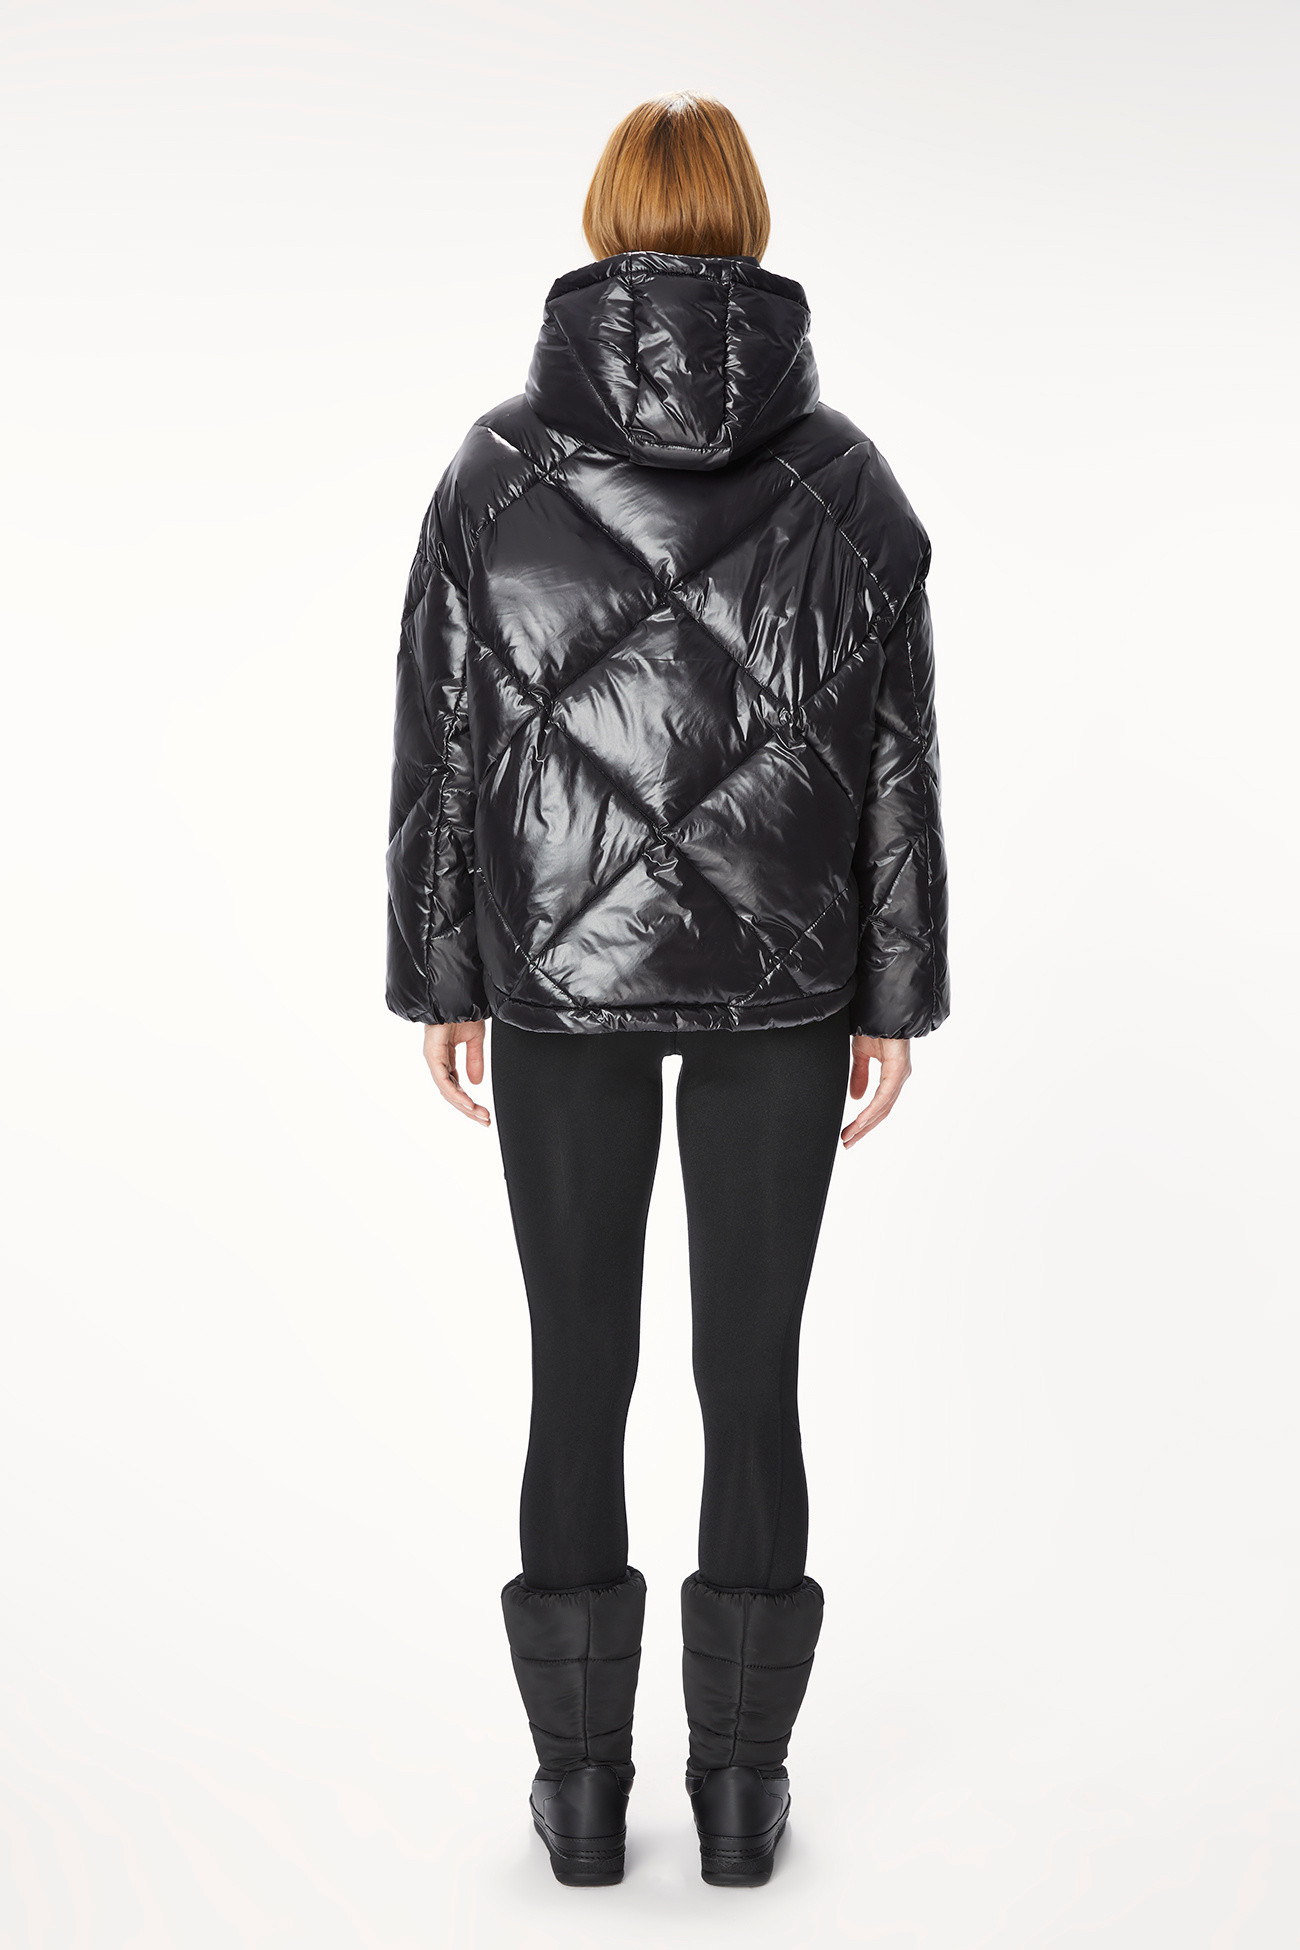 Oof Wear - Short oversized jacket with hood, Black, large image number 5